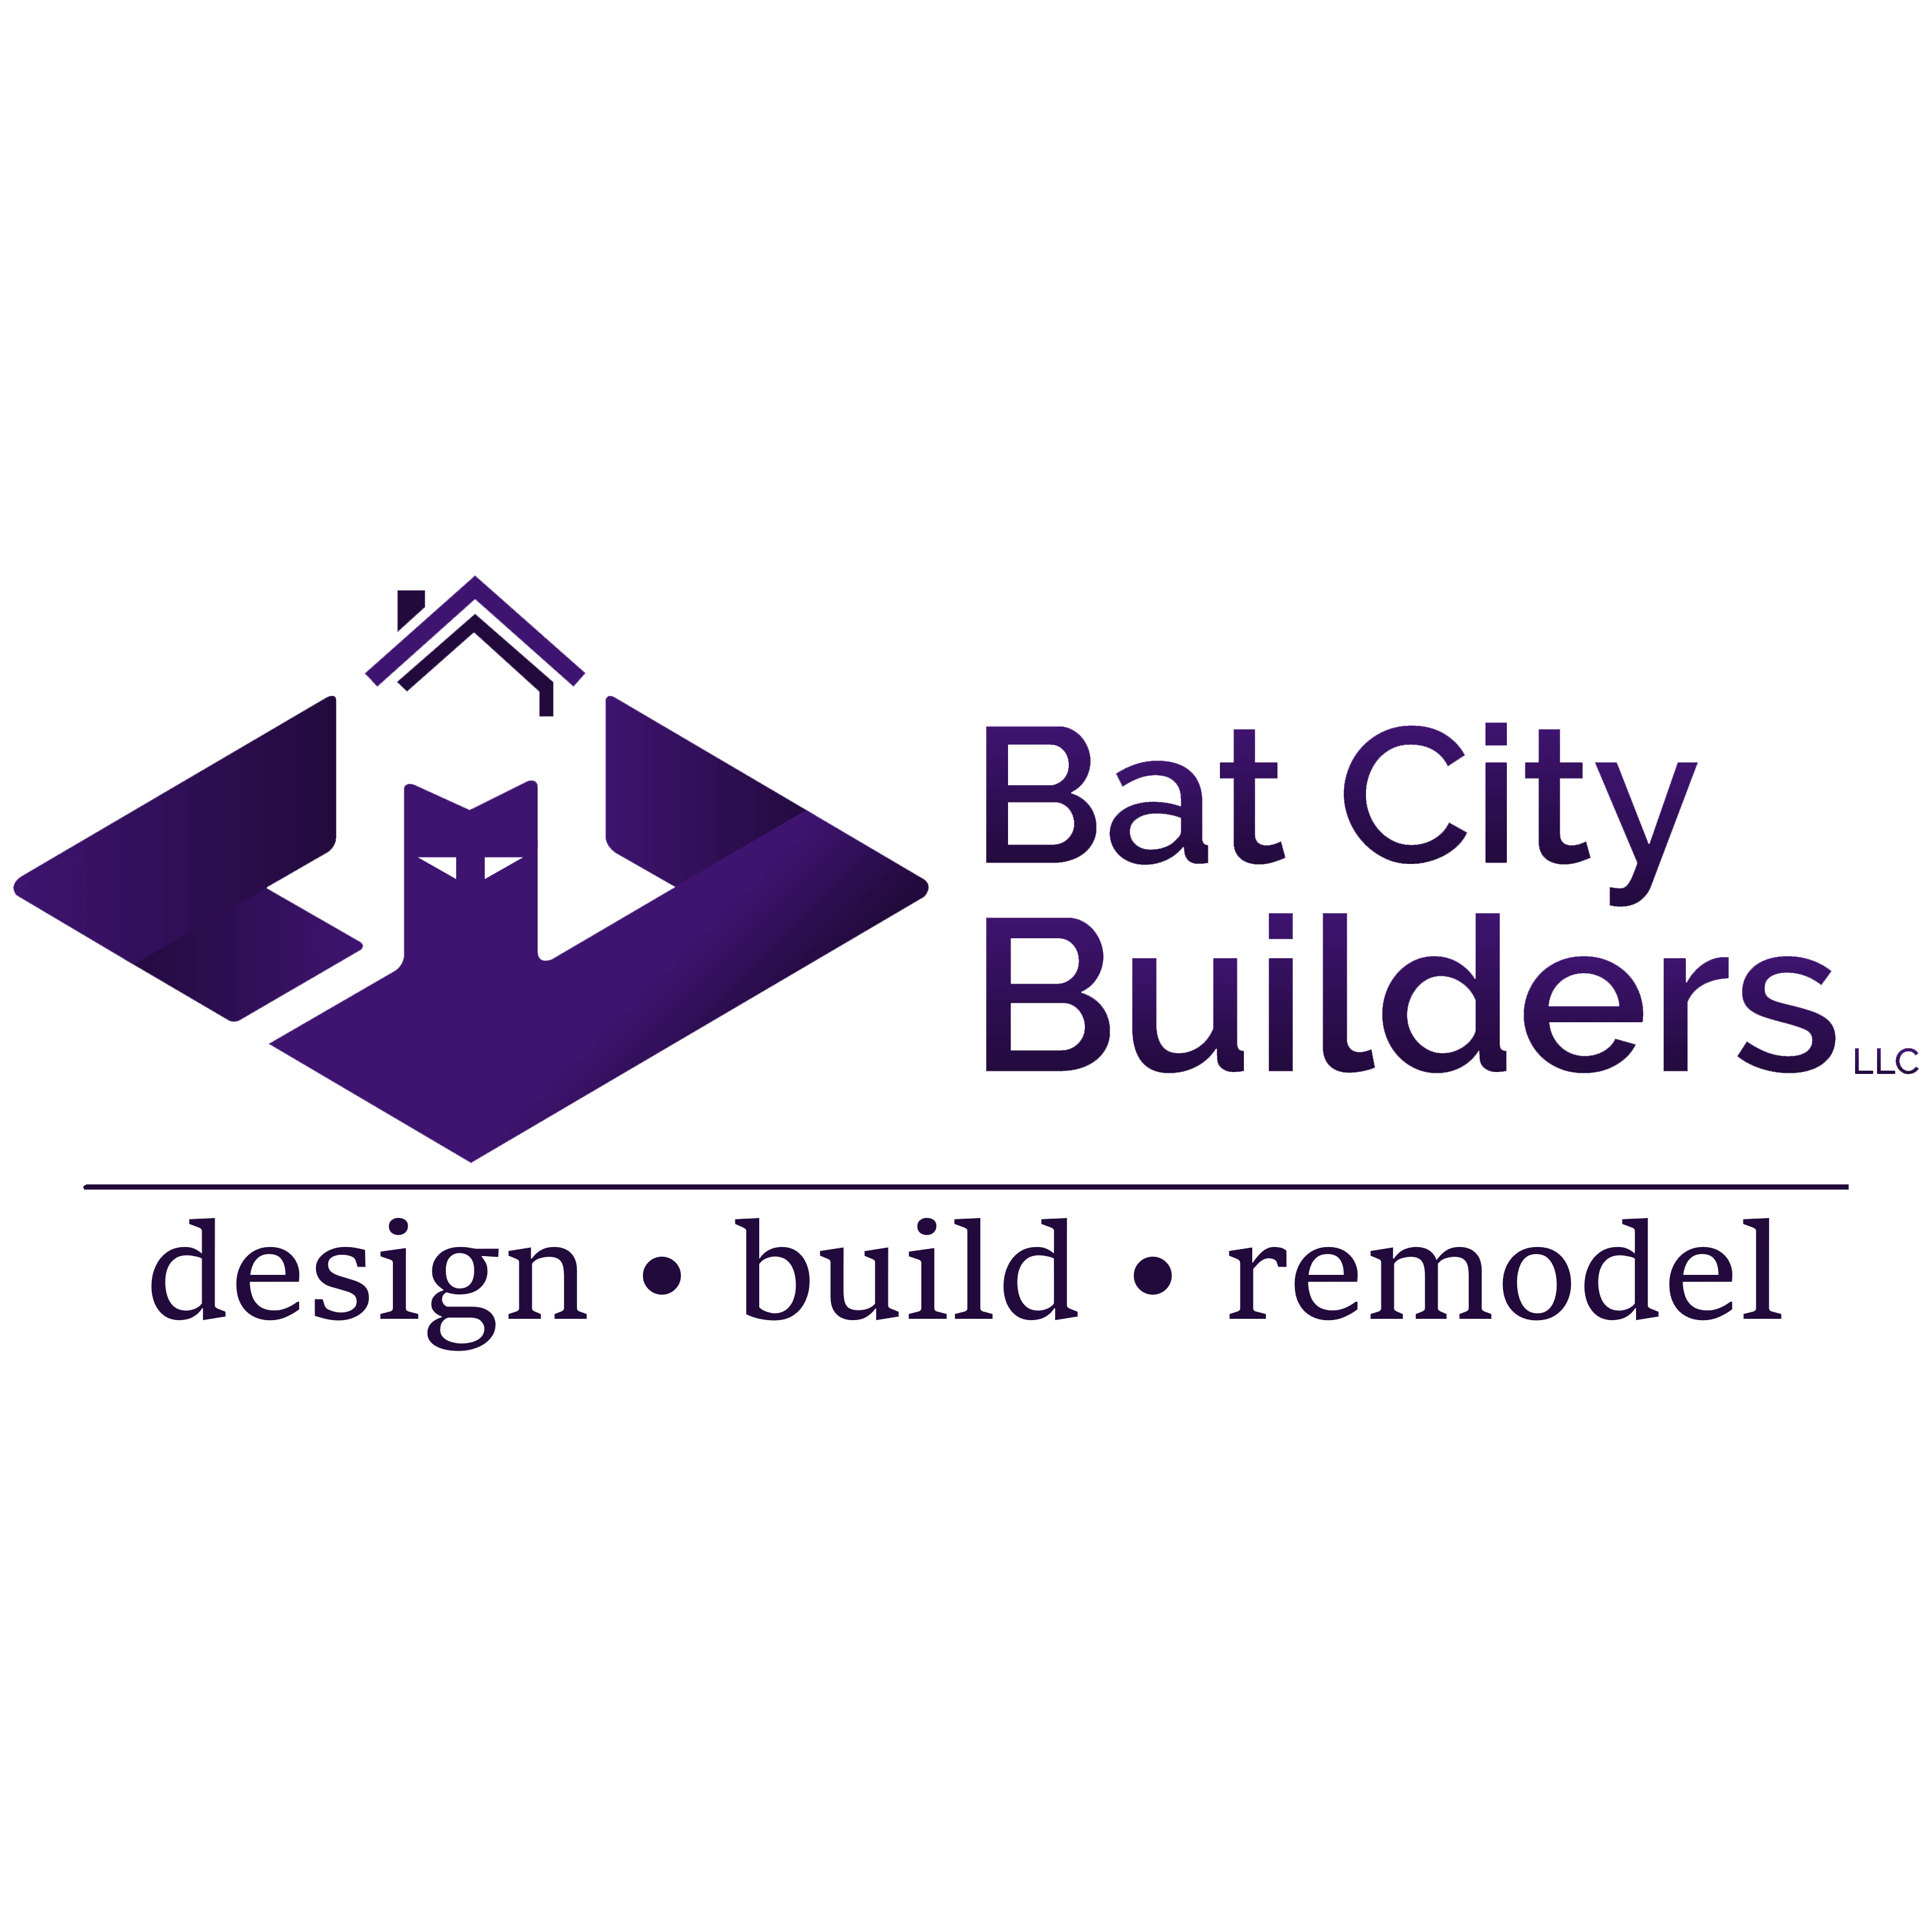 Bat City Builders, LLC